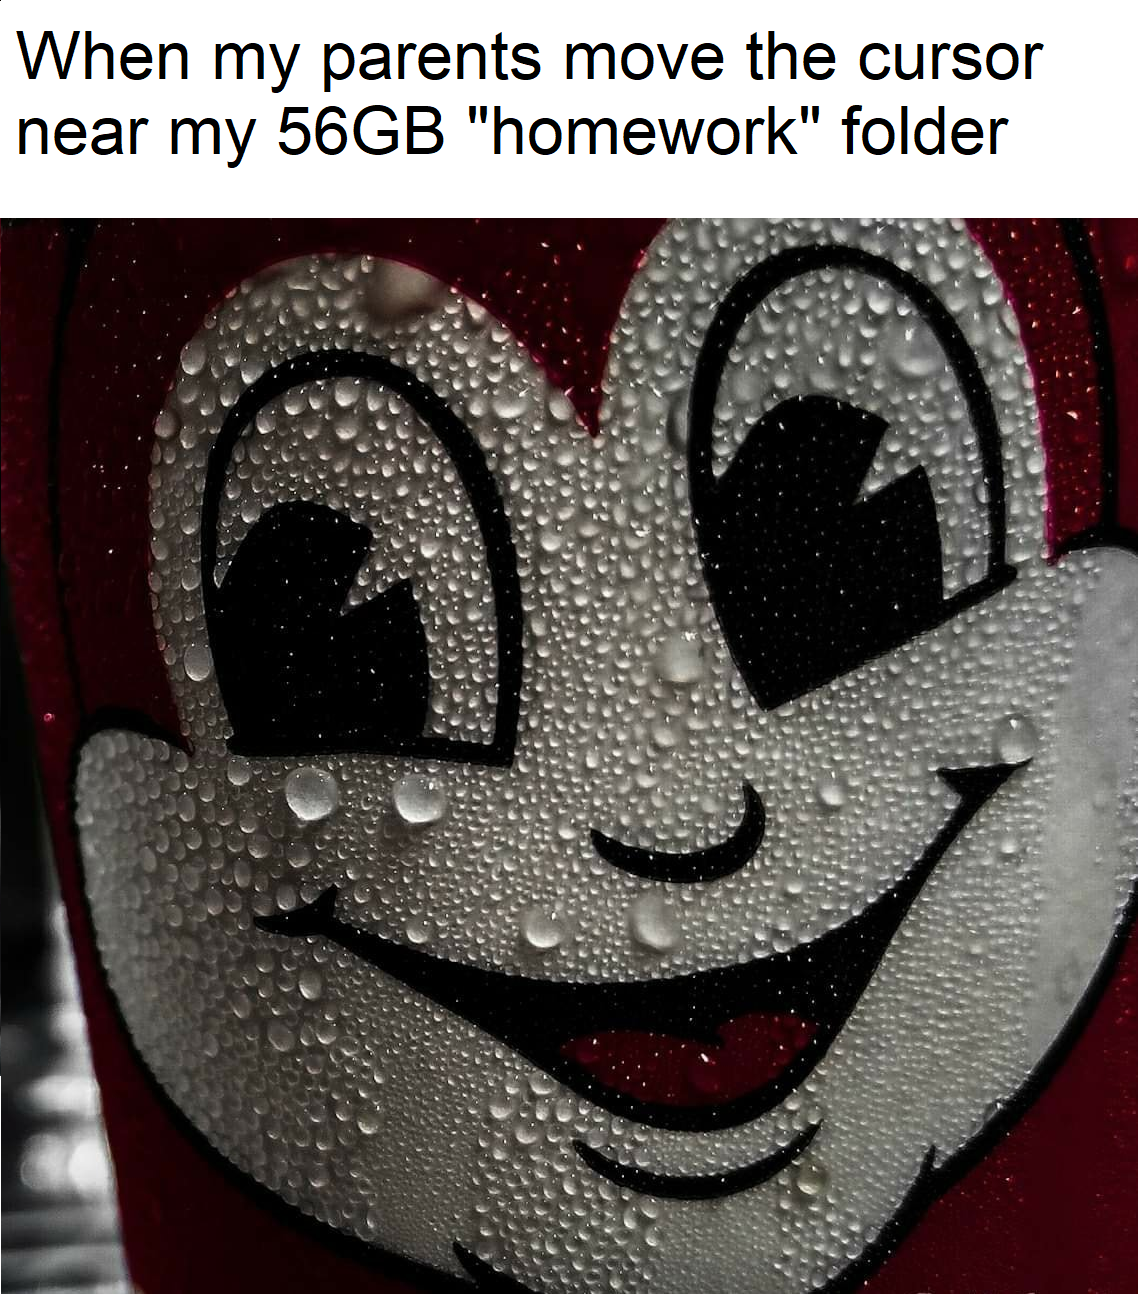 homework folder meme - When my parents move the cursor near my 56GB "homework" folder